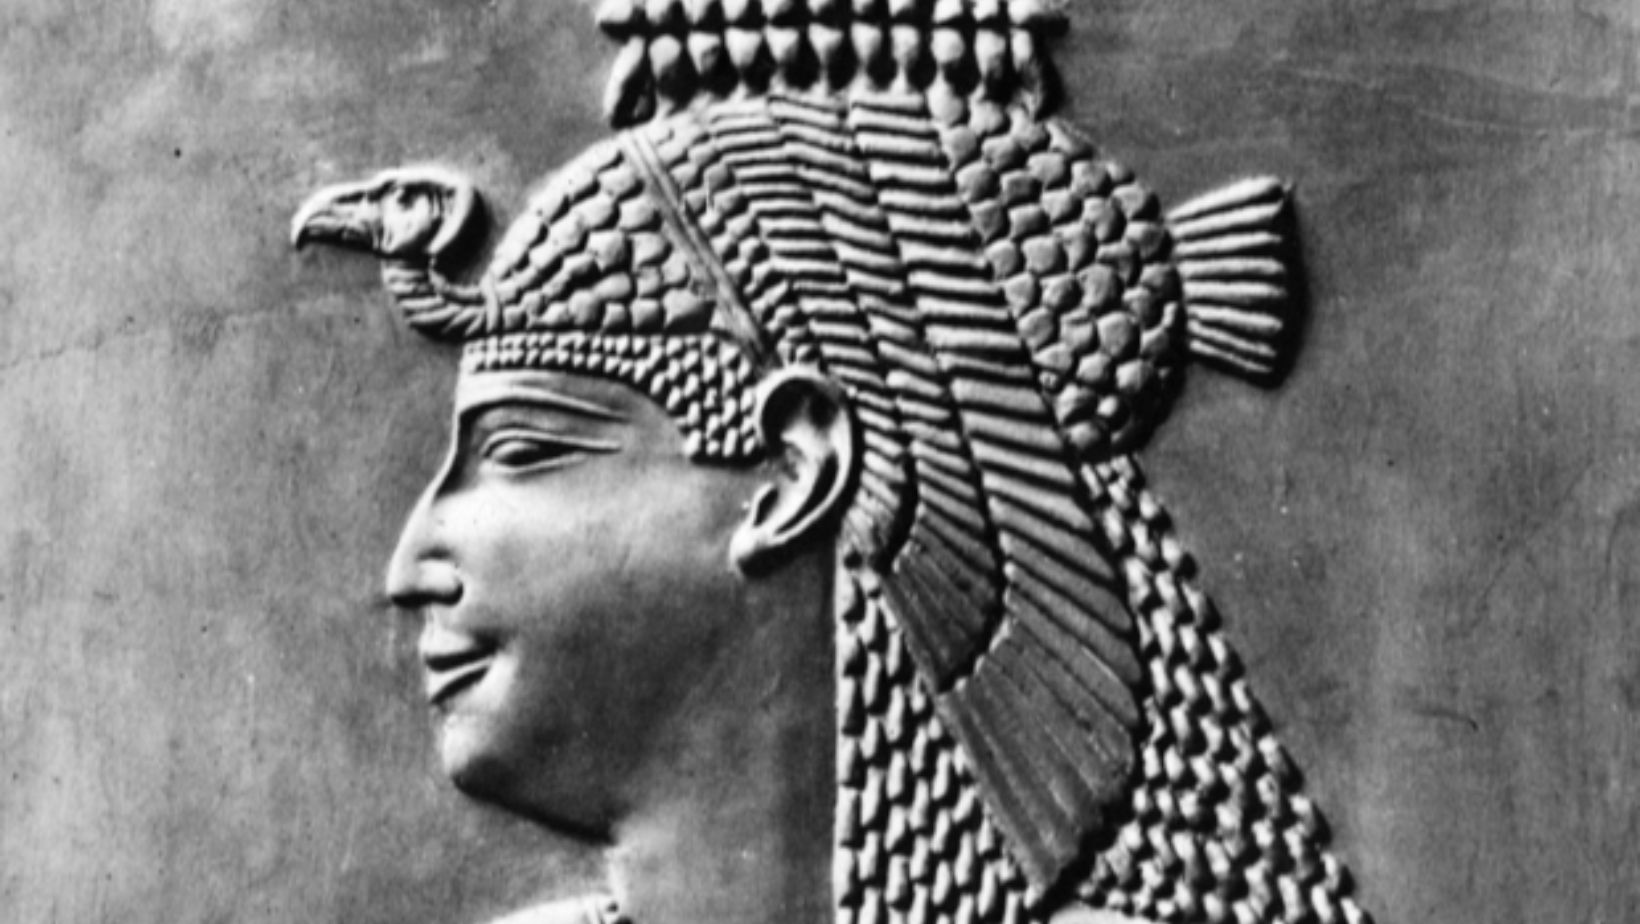 Reconstruct Cleopatra's Look